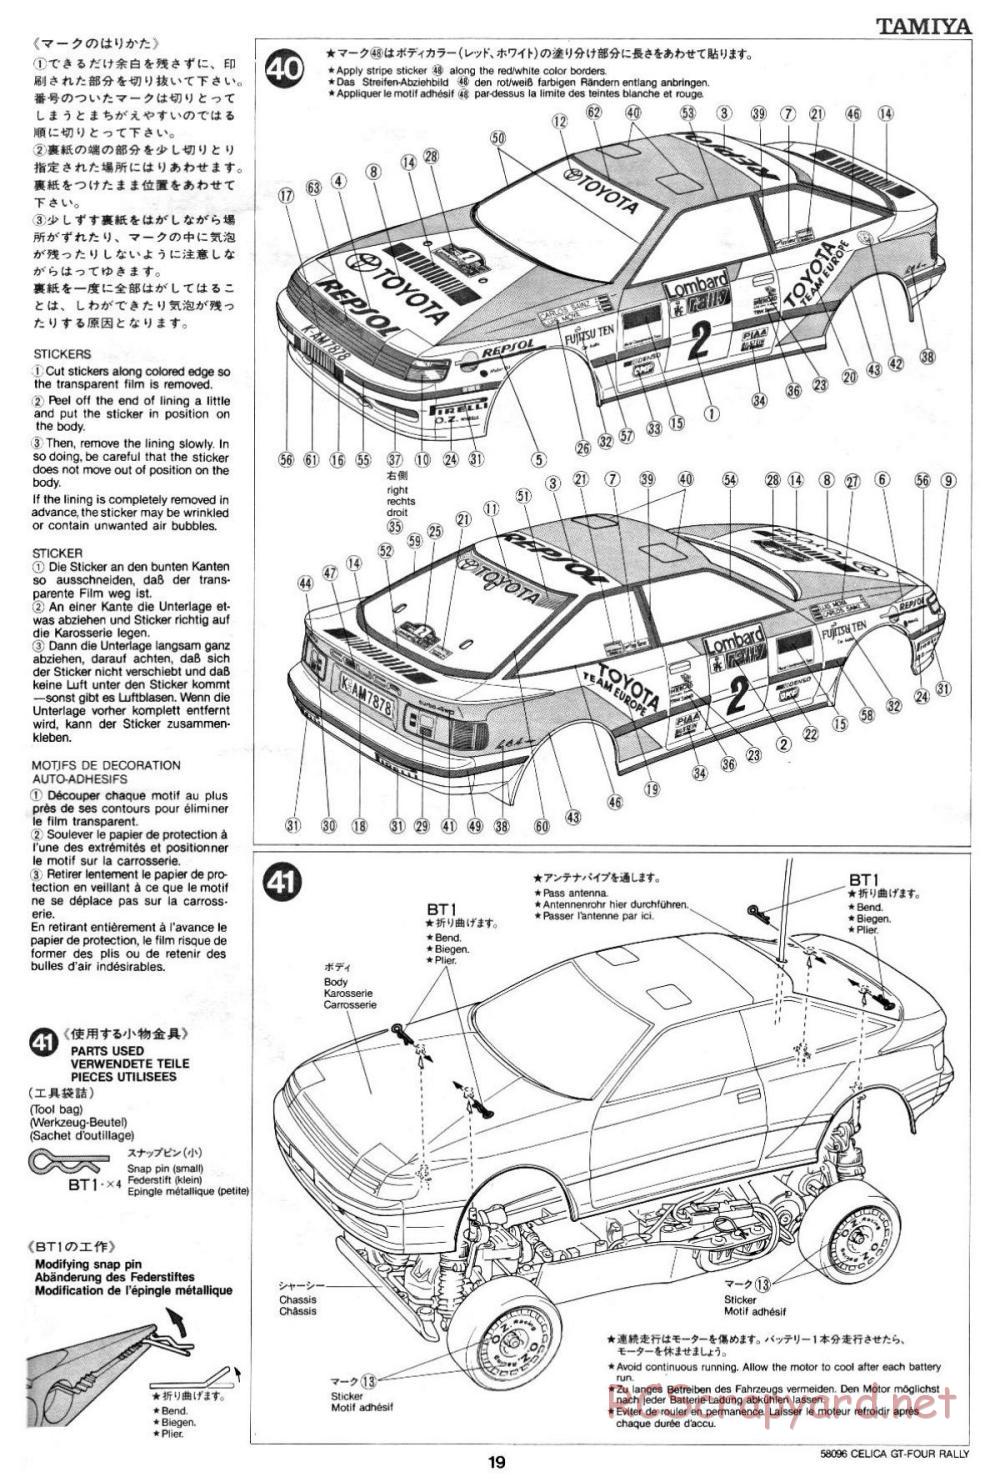 Tamiya - Toyota Celica GT-Four Rally - 58096 - Manual - Page 19